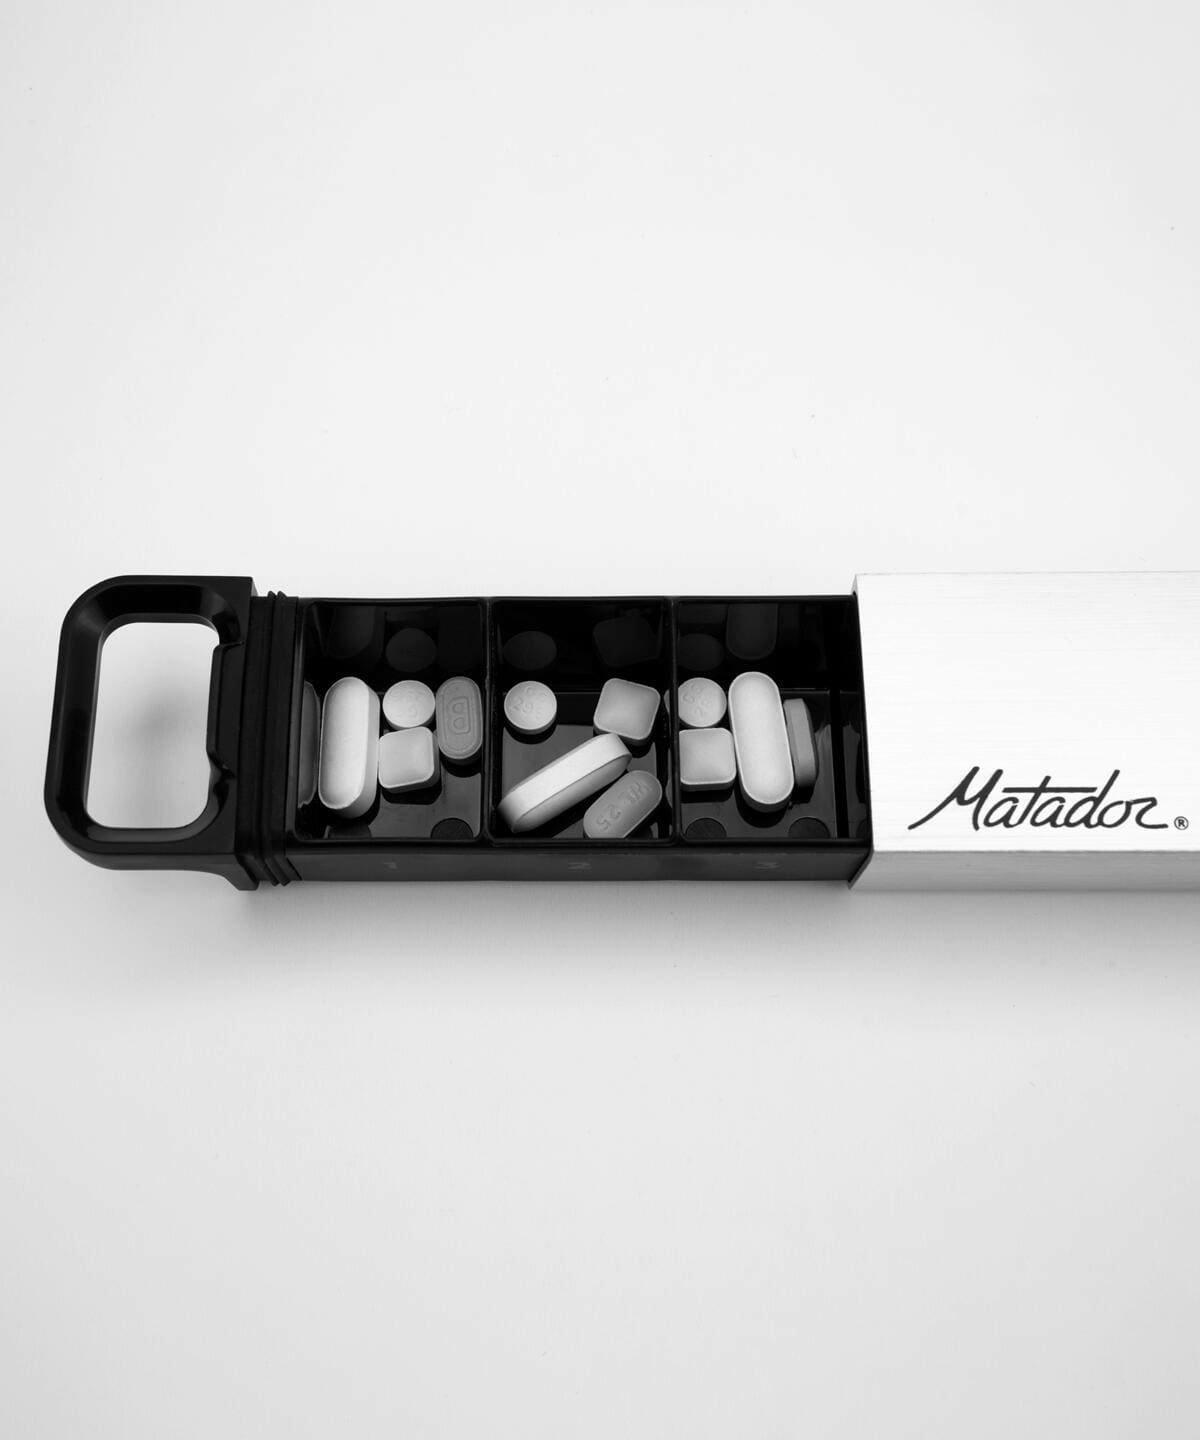 Supreme Matador Waterproof Pill Case